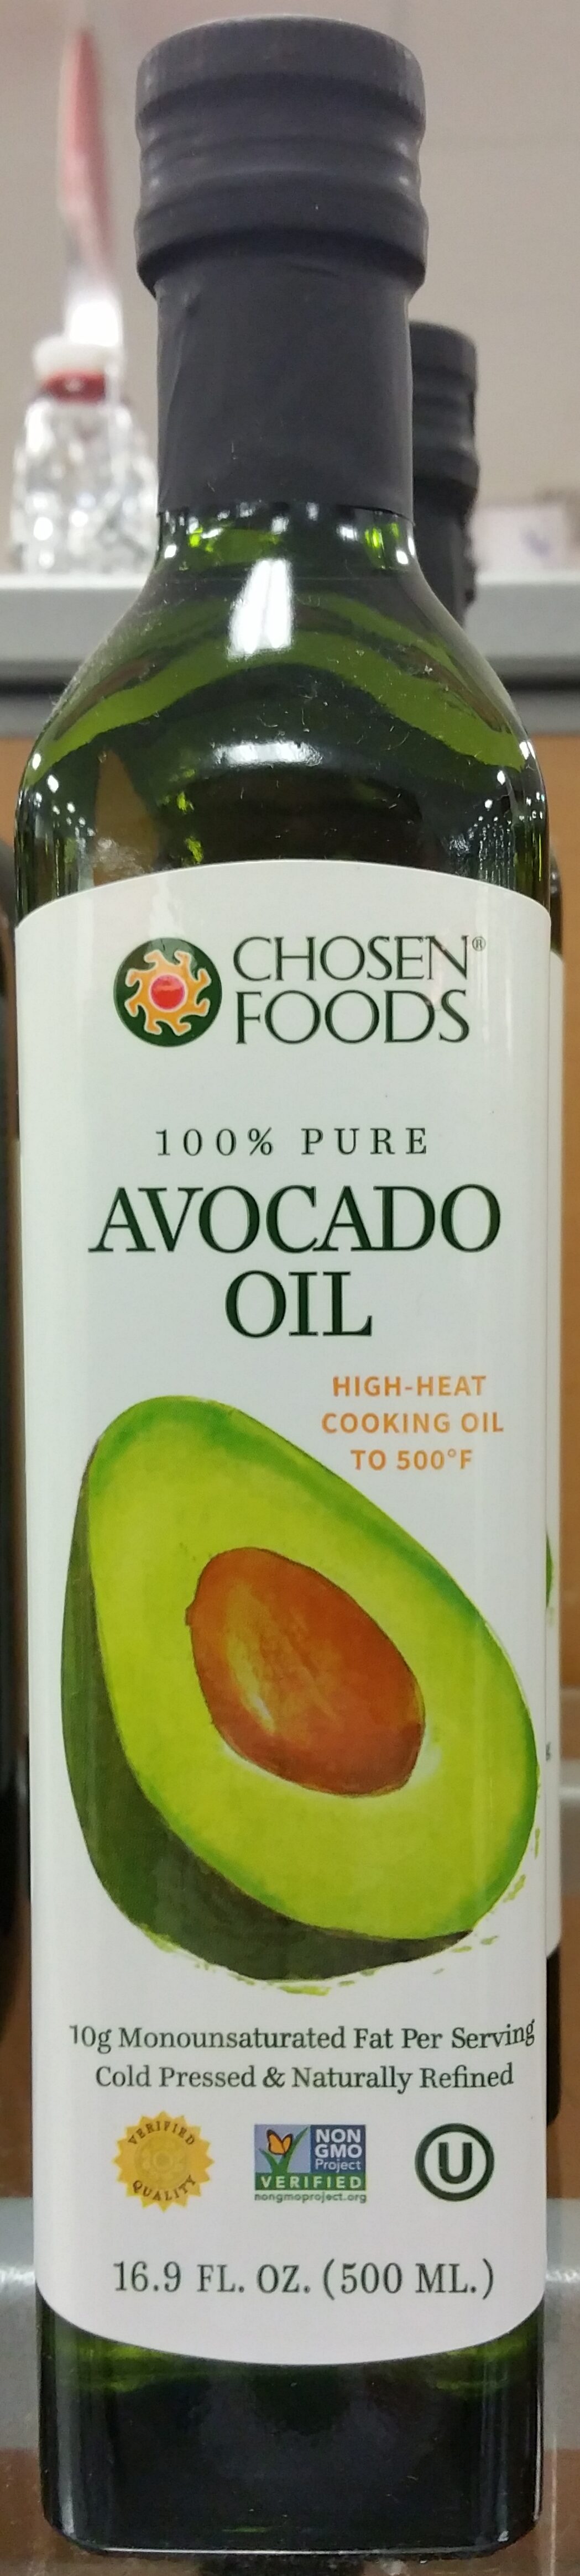 100% Pure Avocado Oil - Product